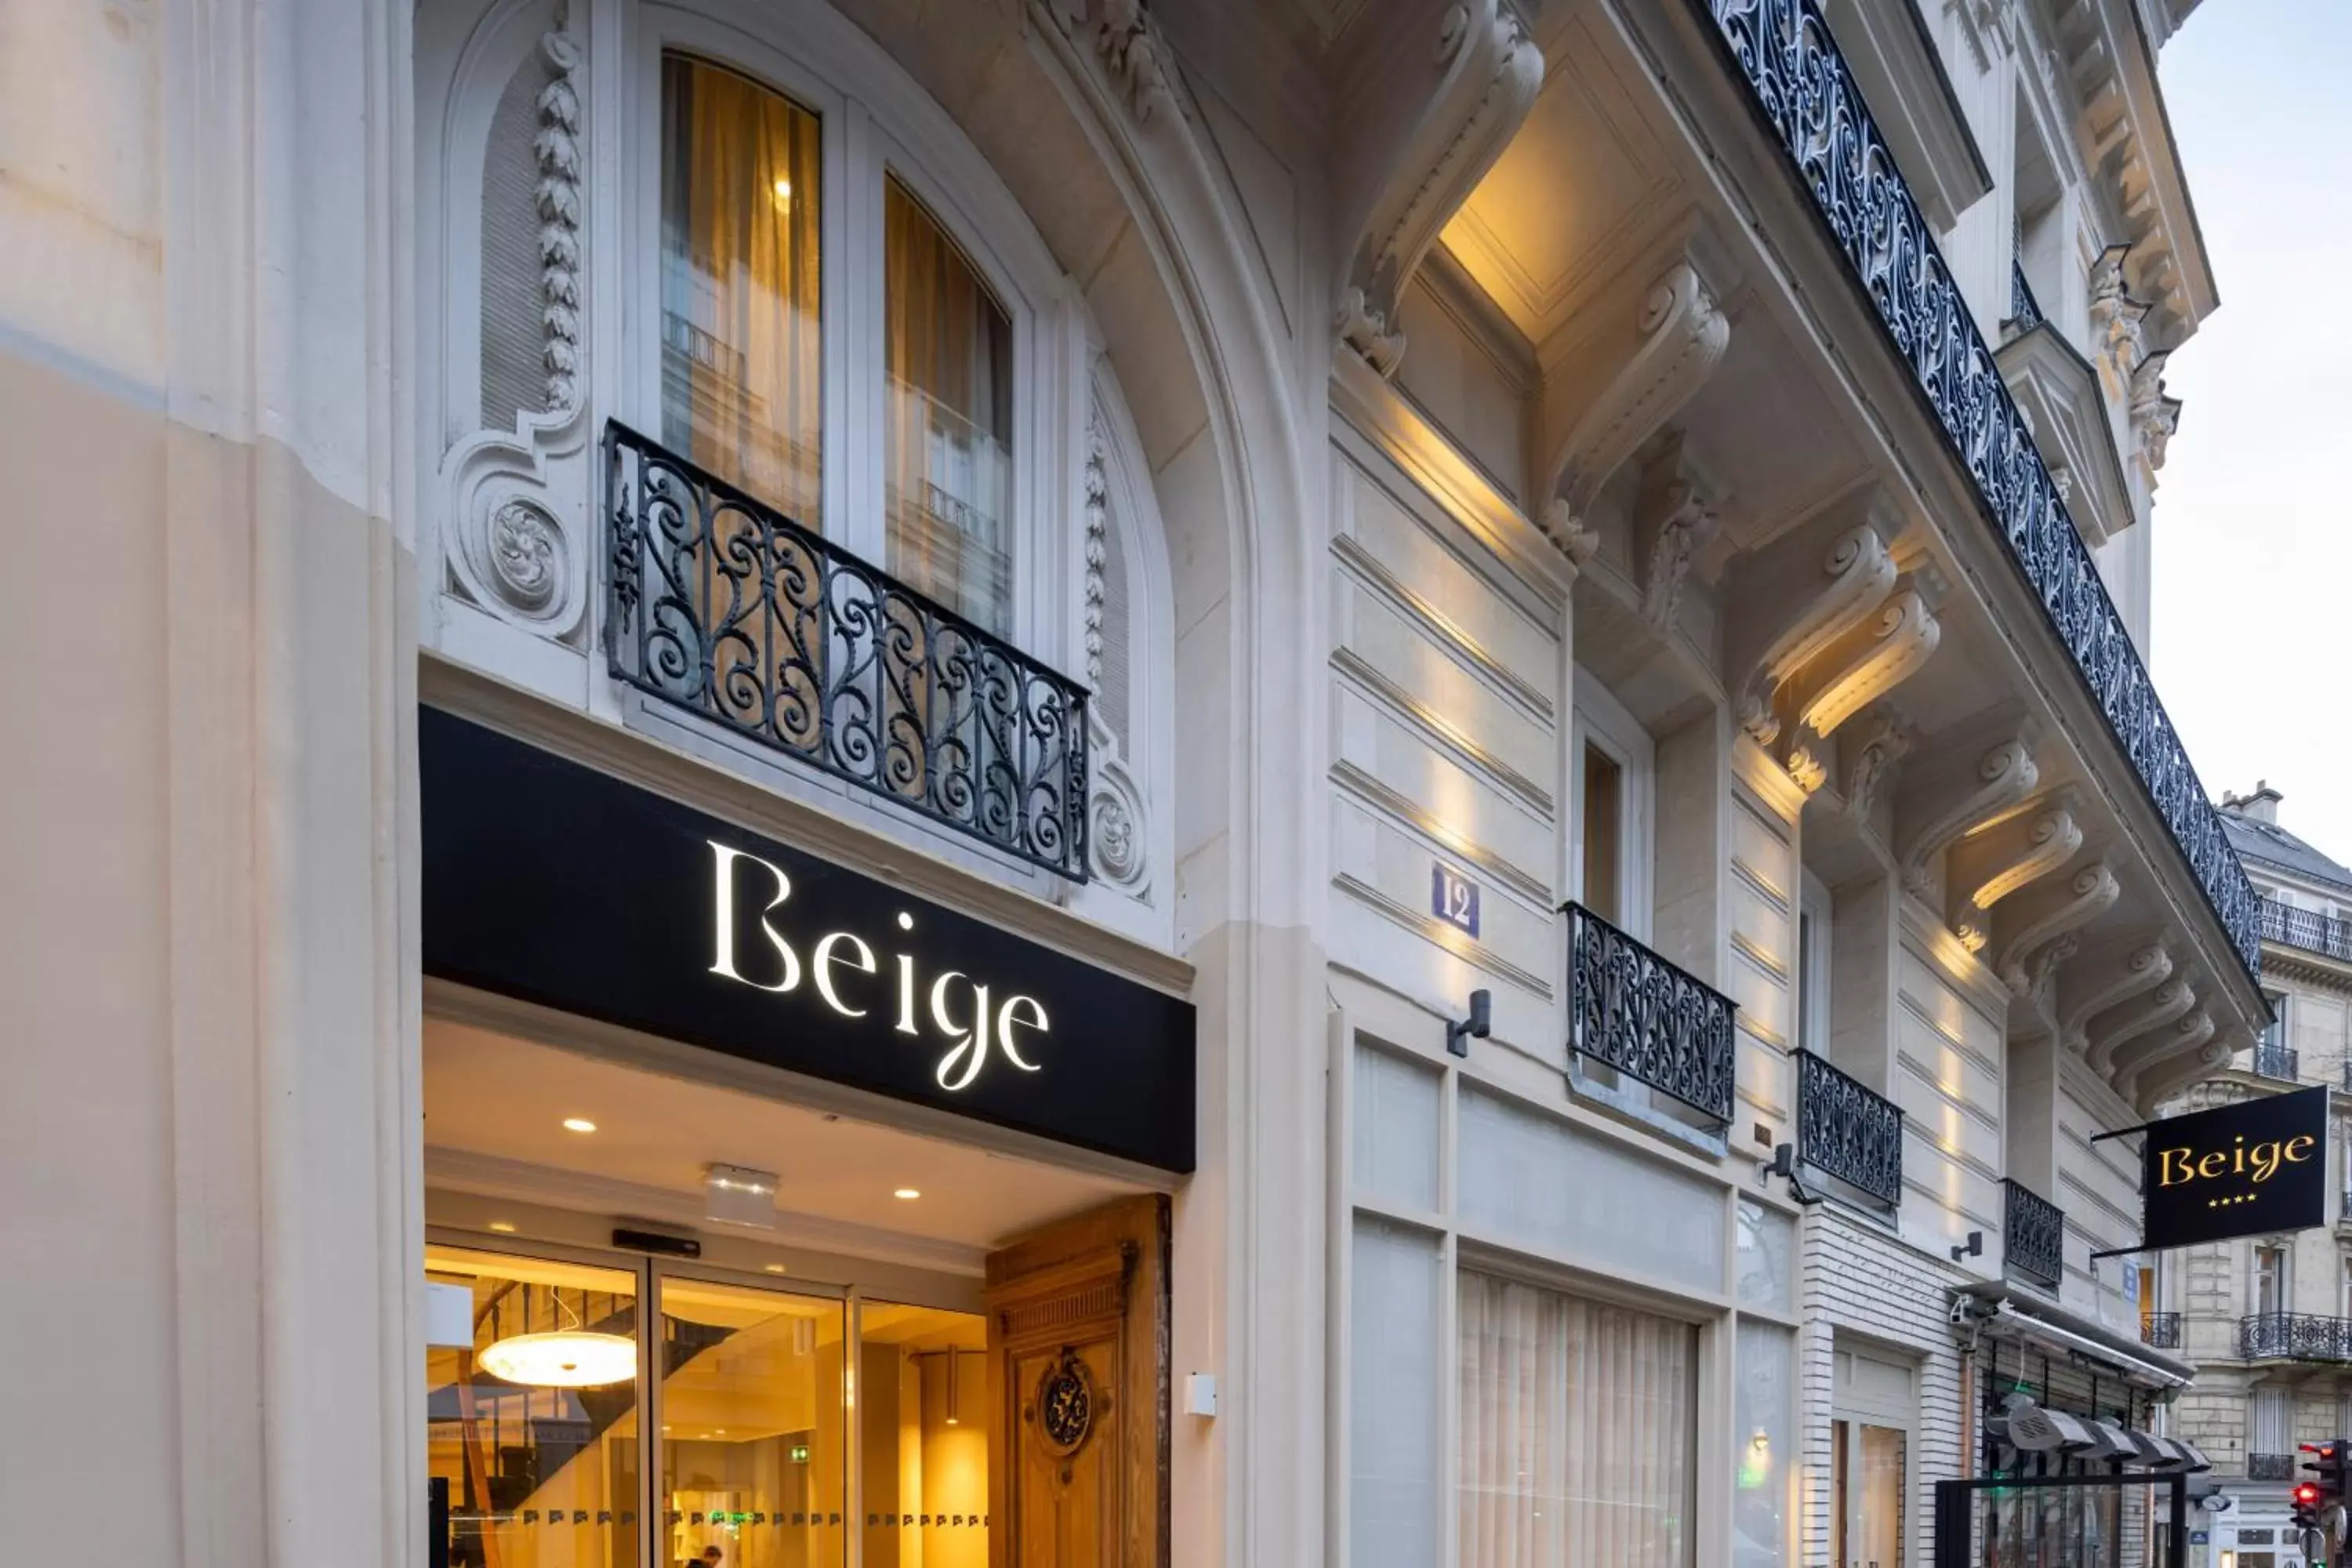 Facade/entrance in Hôtel Beige